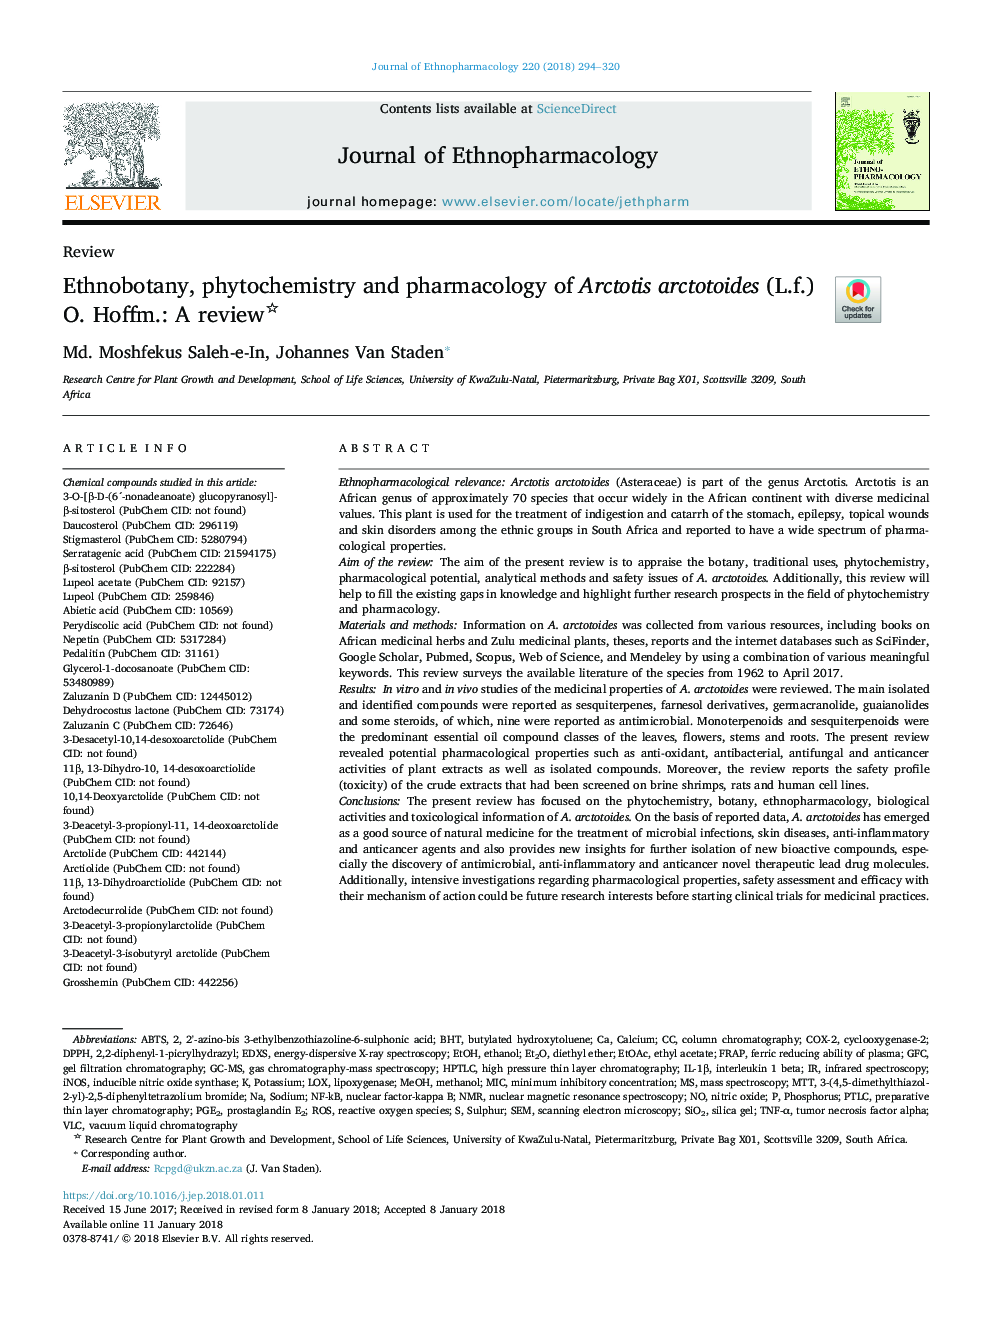 Ethnobotany, phytochemistry and pharmacology of Arctotis arctotoides (L.f.) O. Hoffm.: A review